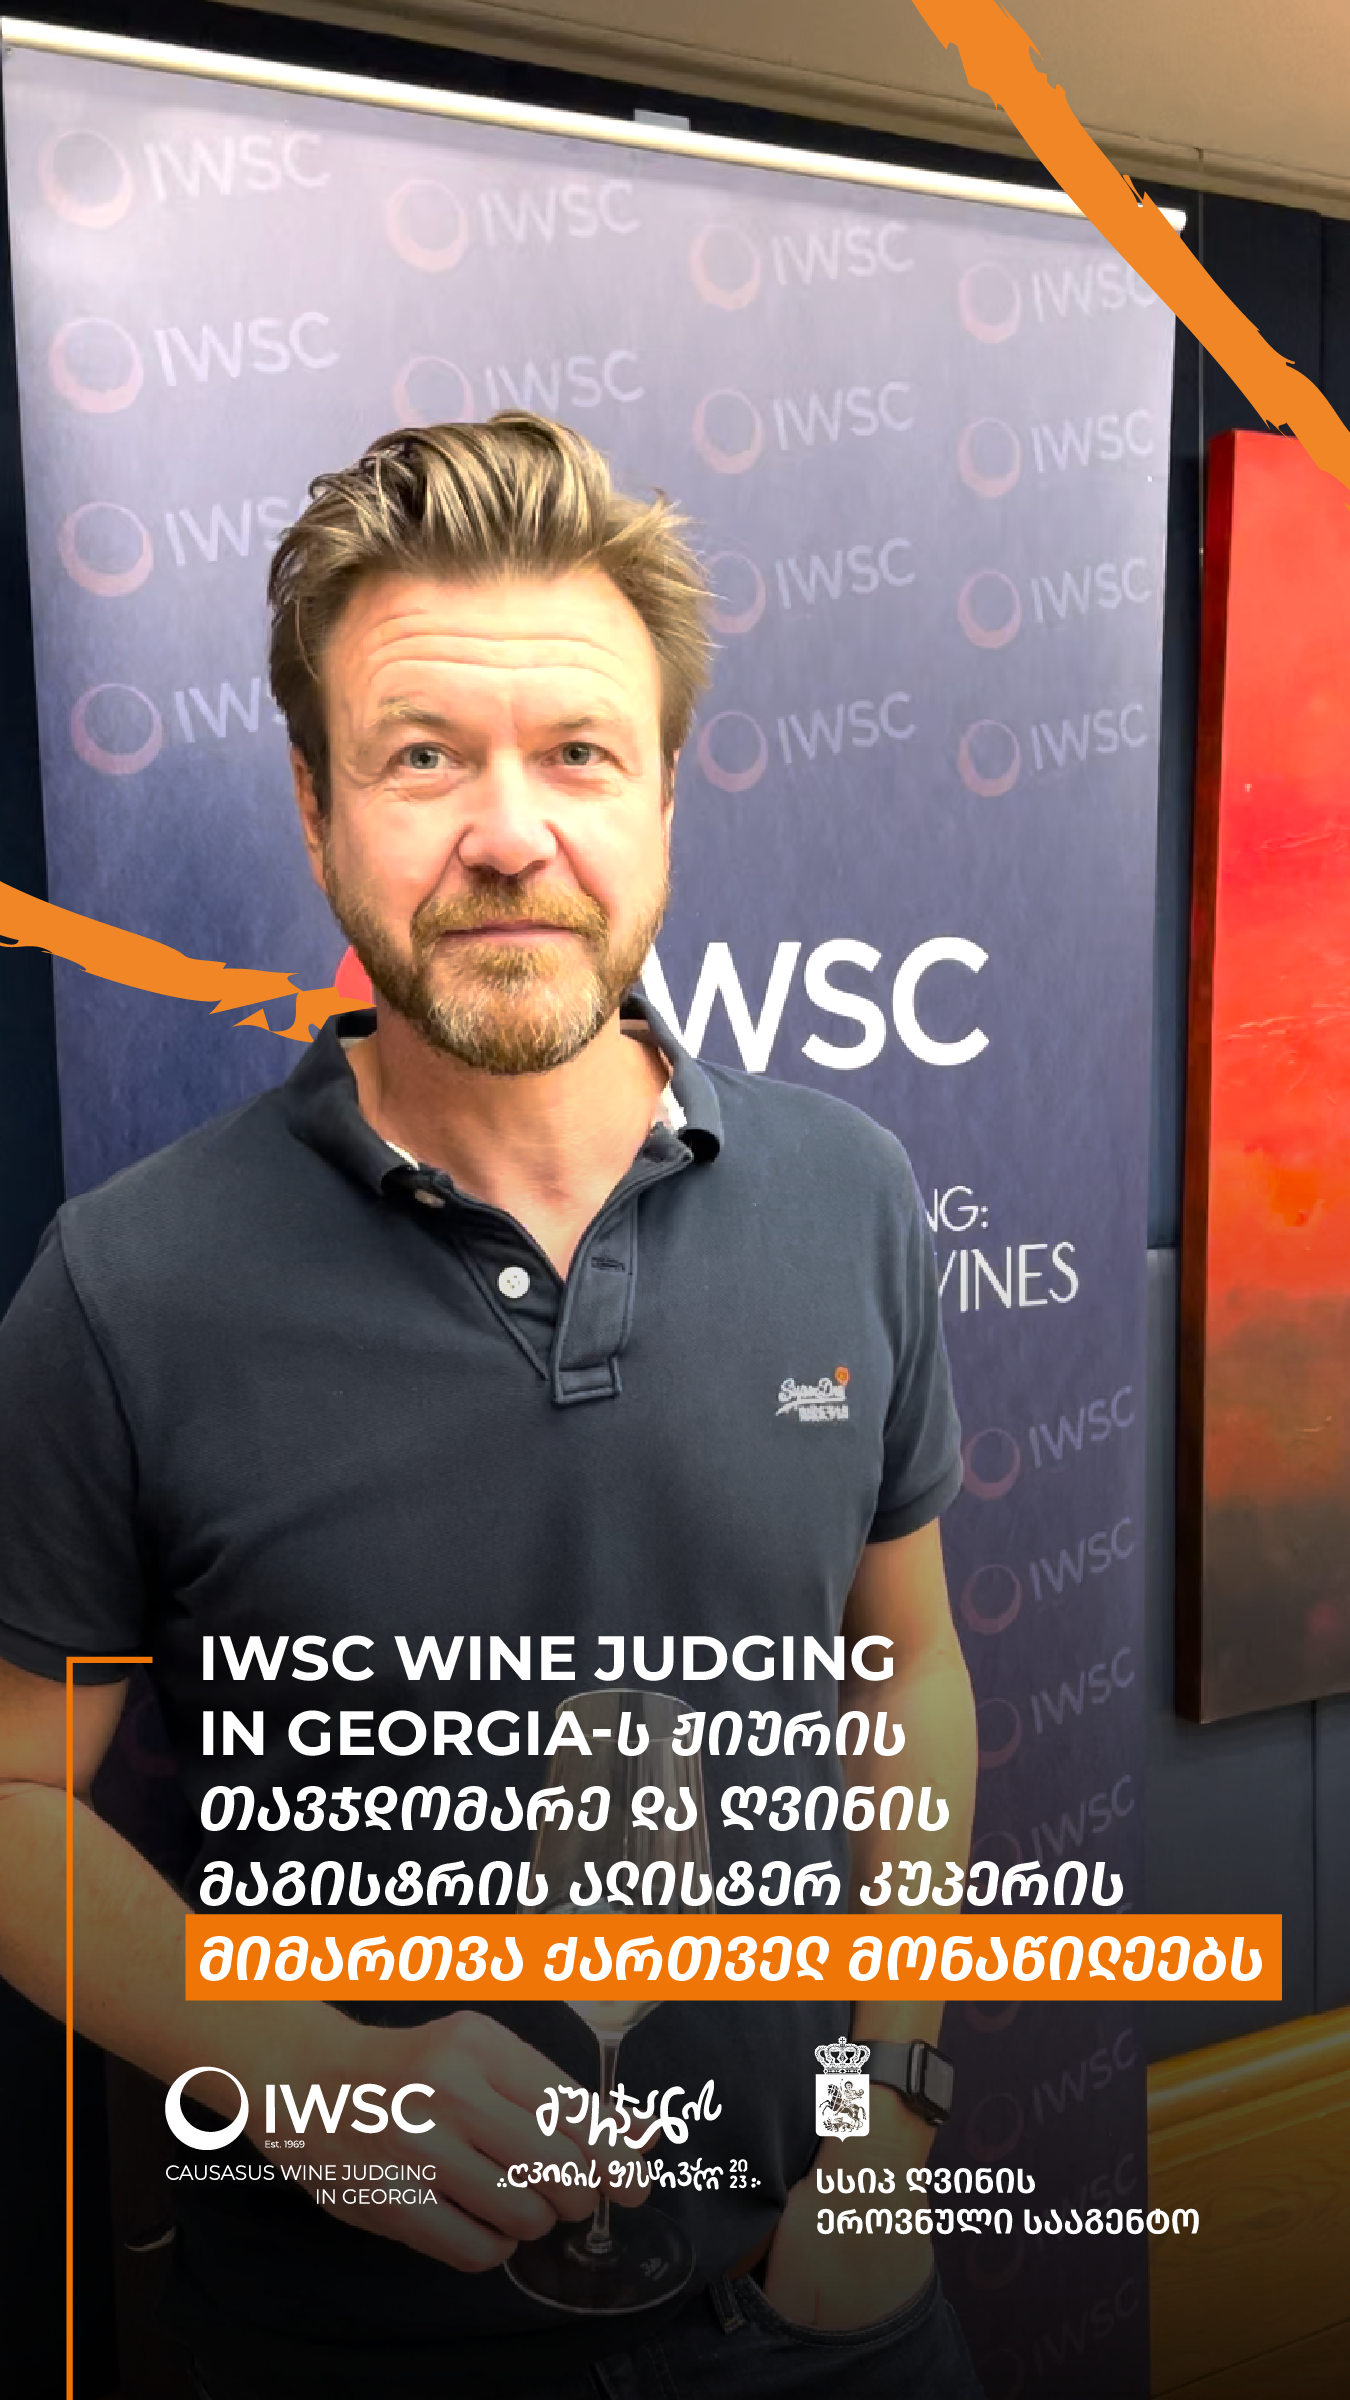 IWSC Wine Judging in Georgia-ს ჟიურის თავჯდომარე და ღვინის მაგისტრის ალისტერ კუპერის მიმართვა ქართველ მონაწილეებს